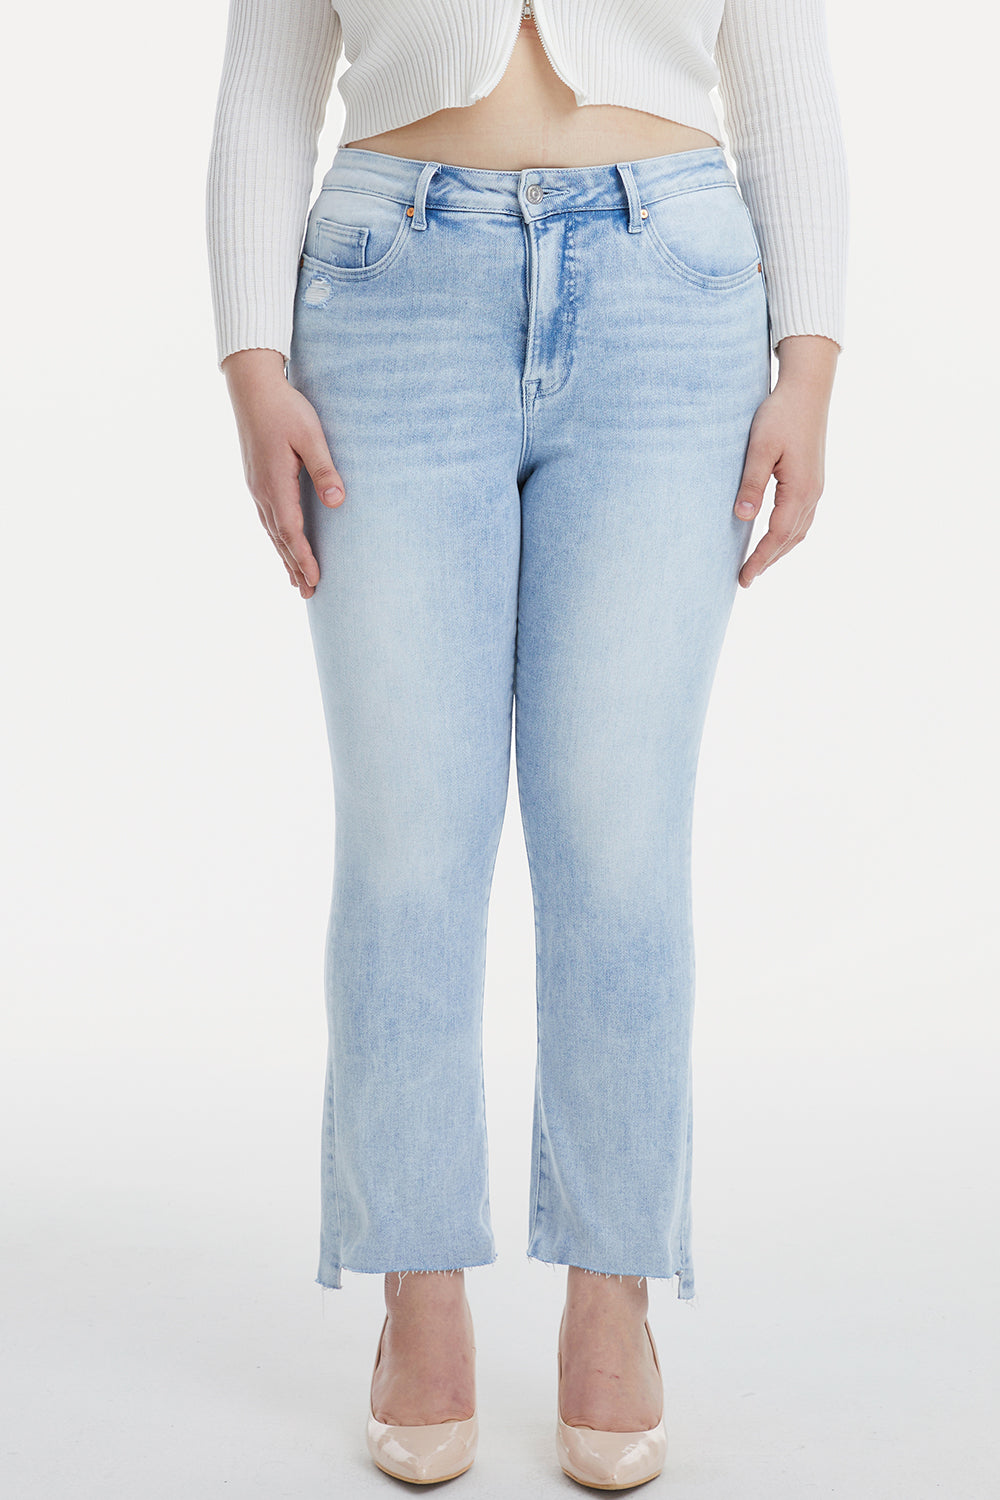 KESLEY High Waist Raw Hem Washed Straight Jeans Petite and Plus Size Denim Pants Cotton